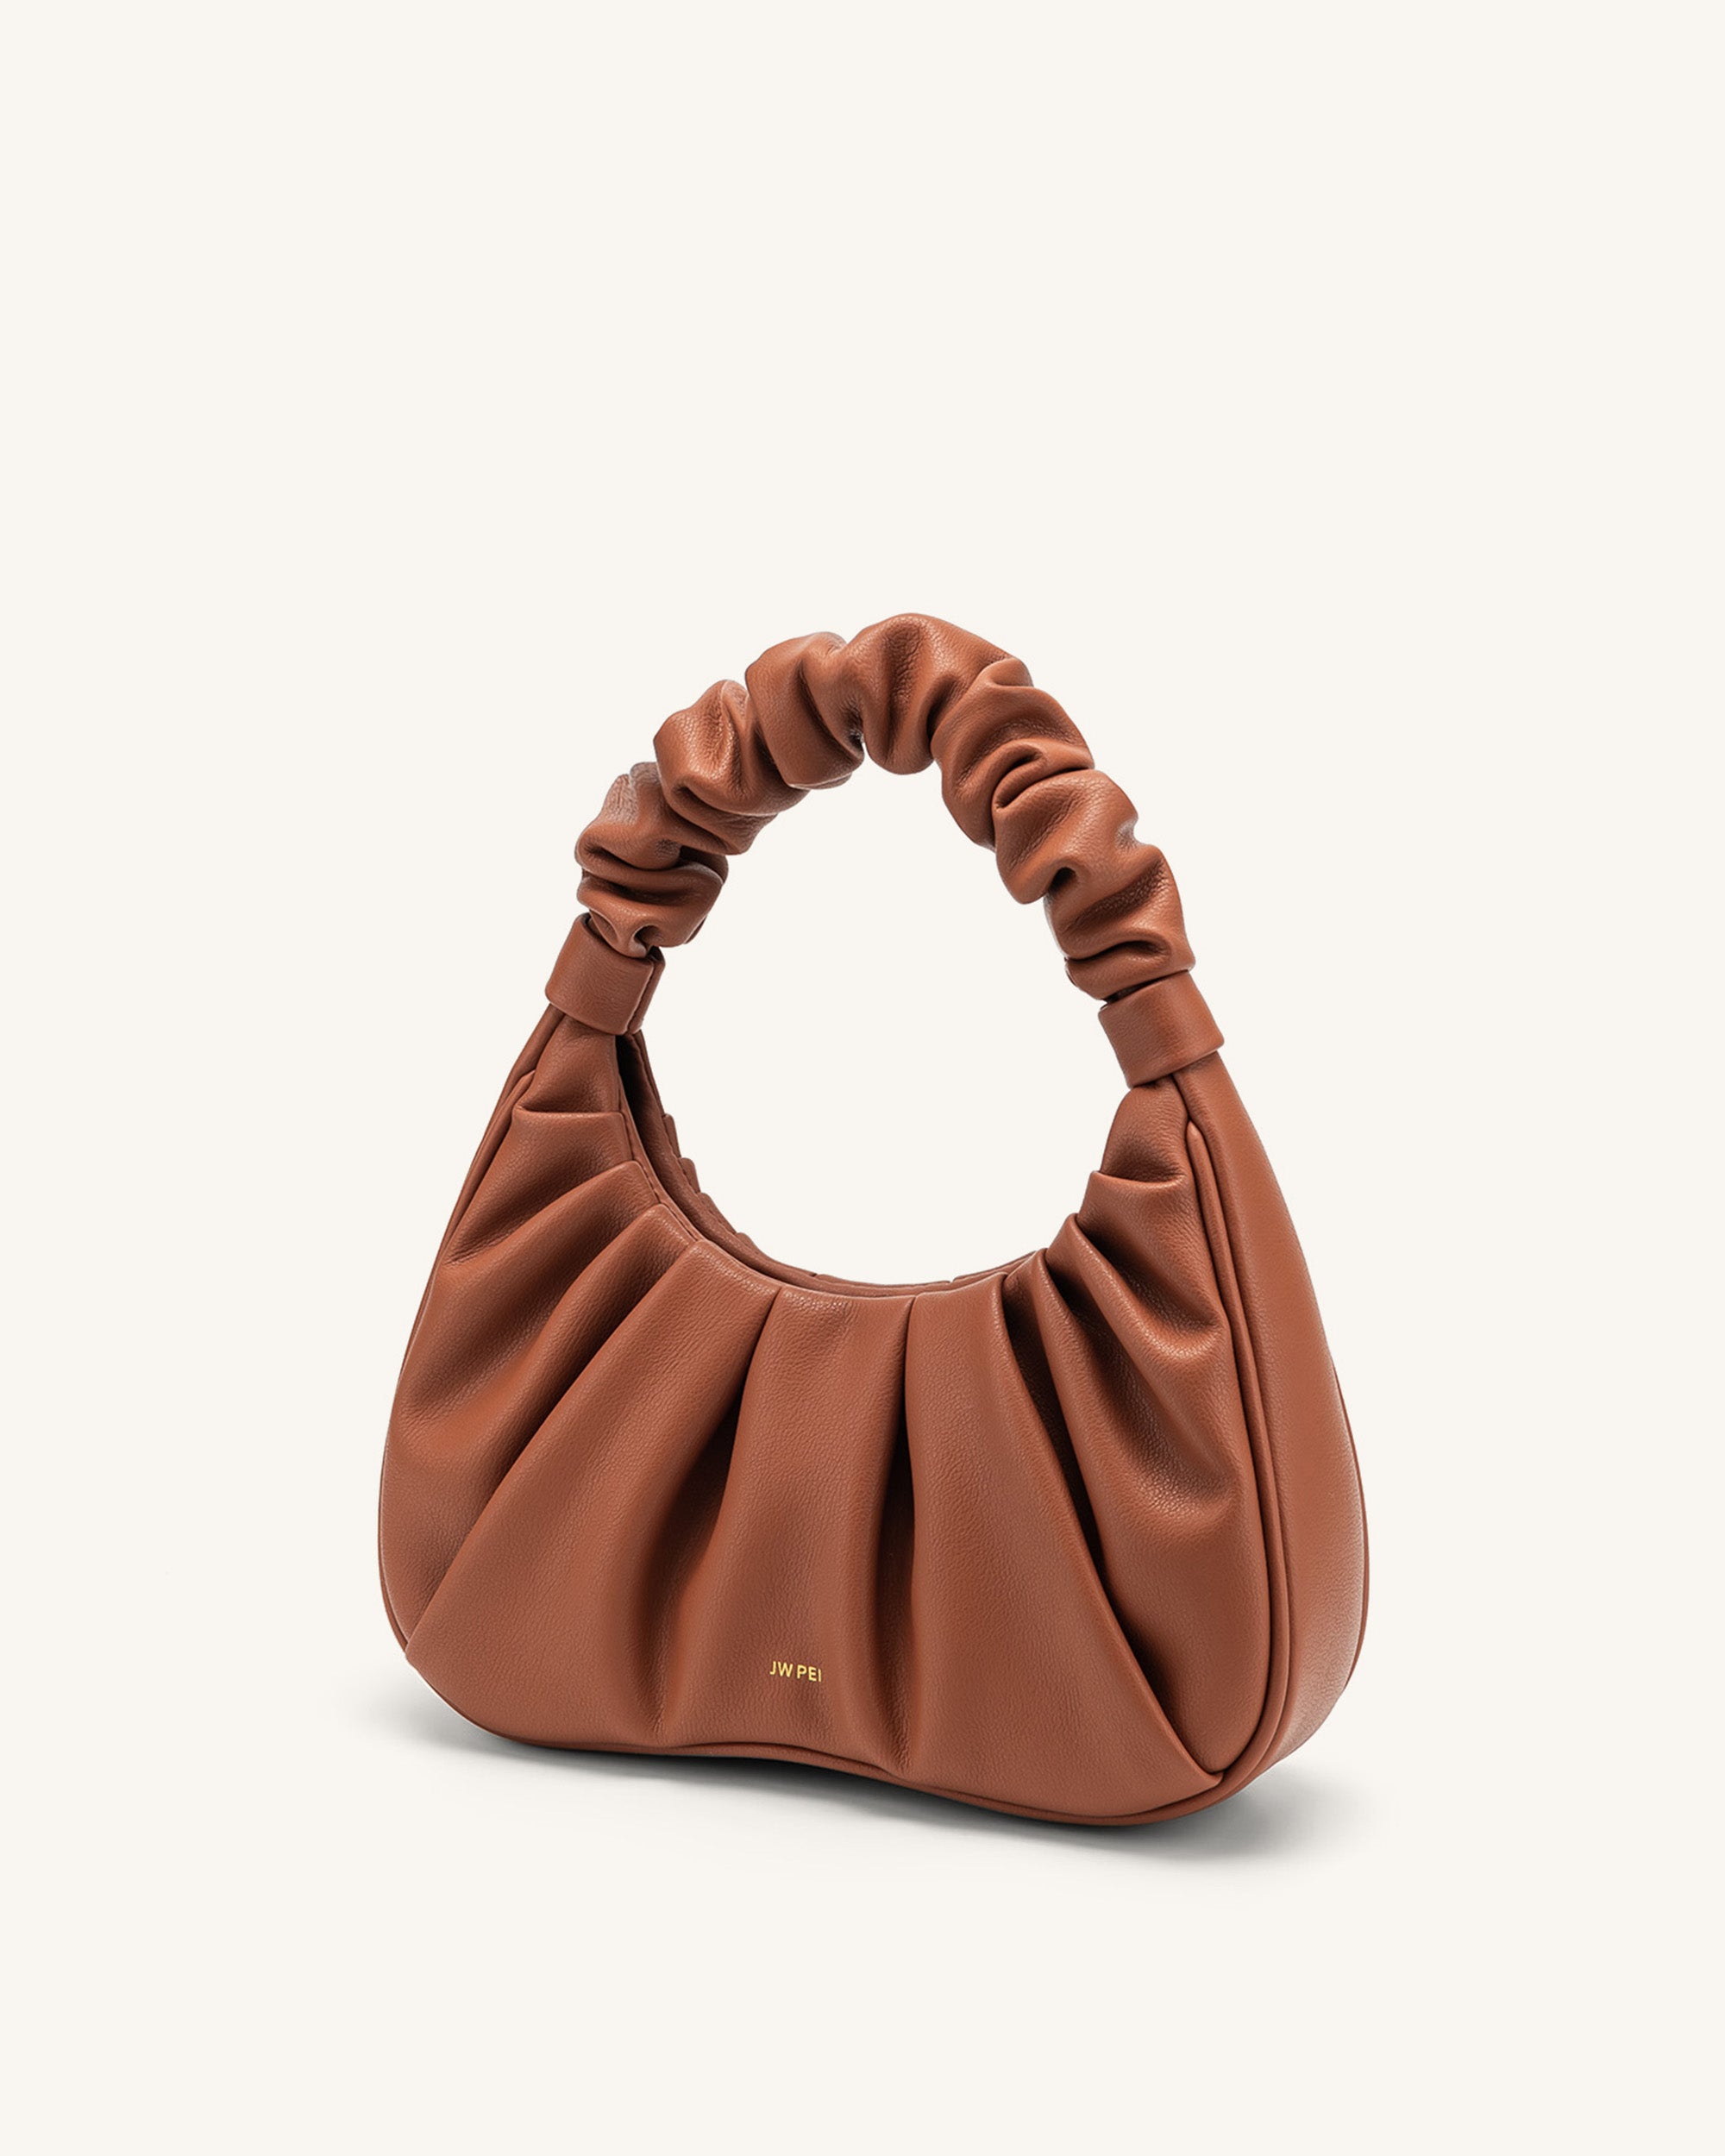 JW PEI handbag review, Vegan leather